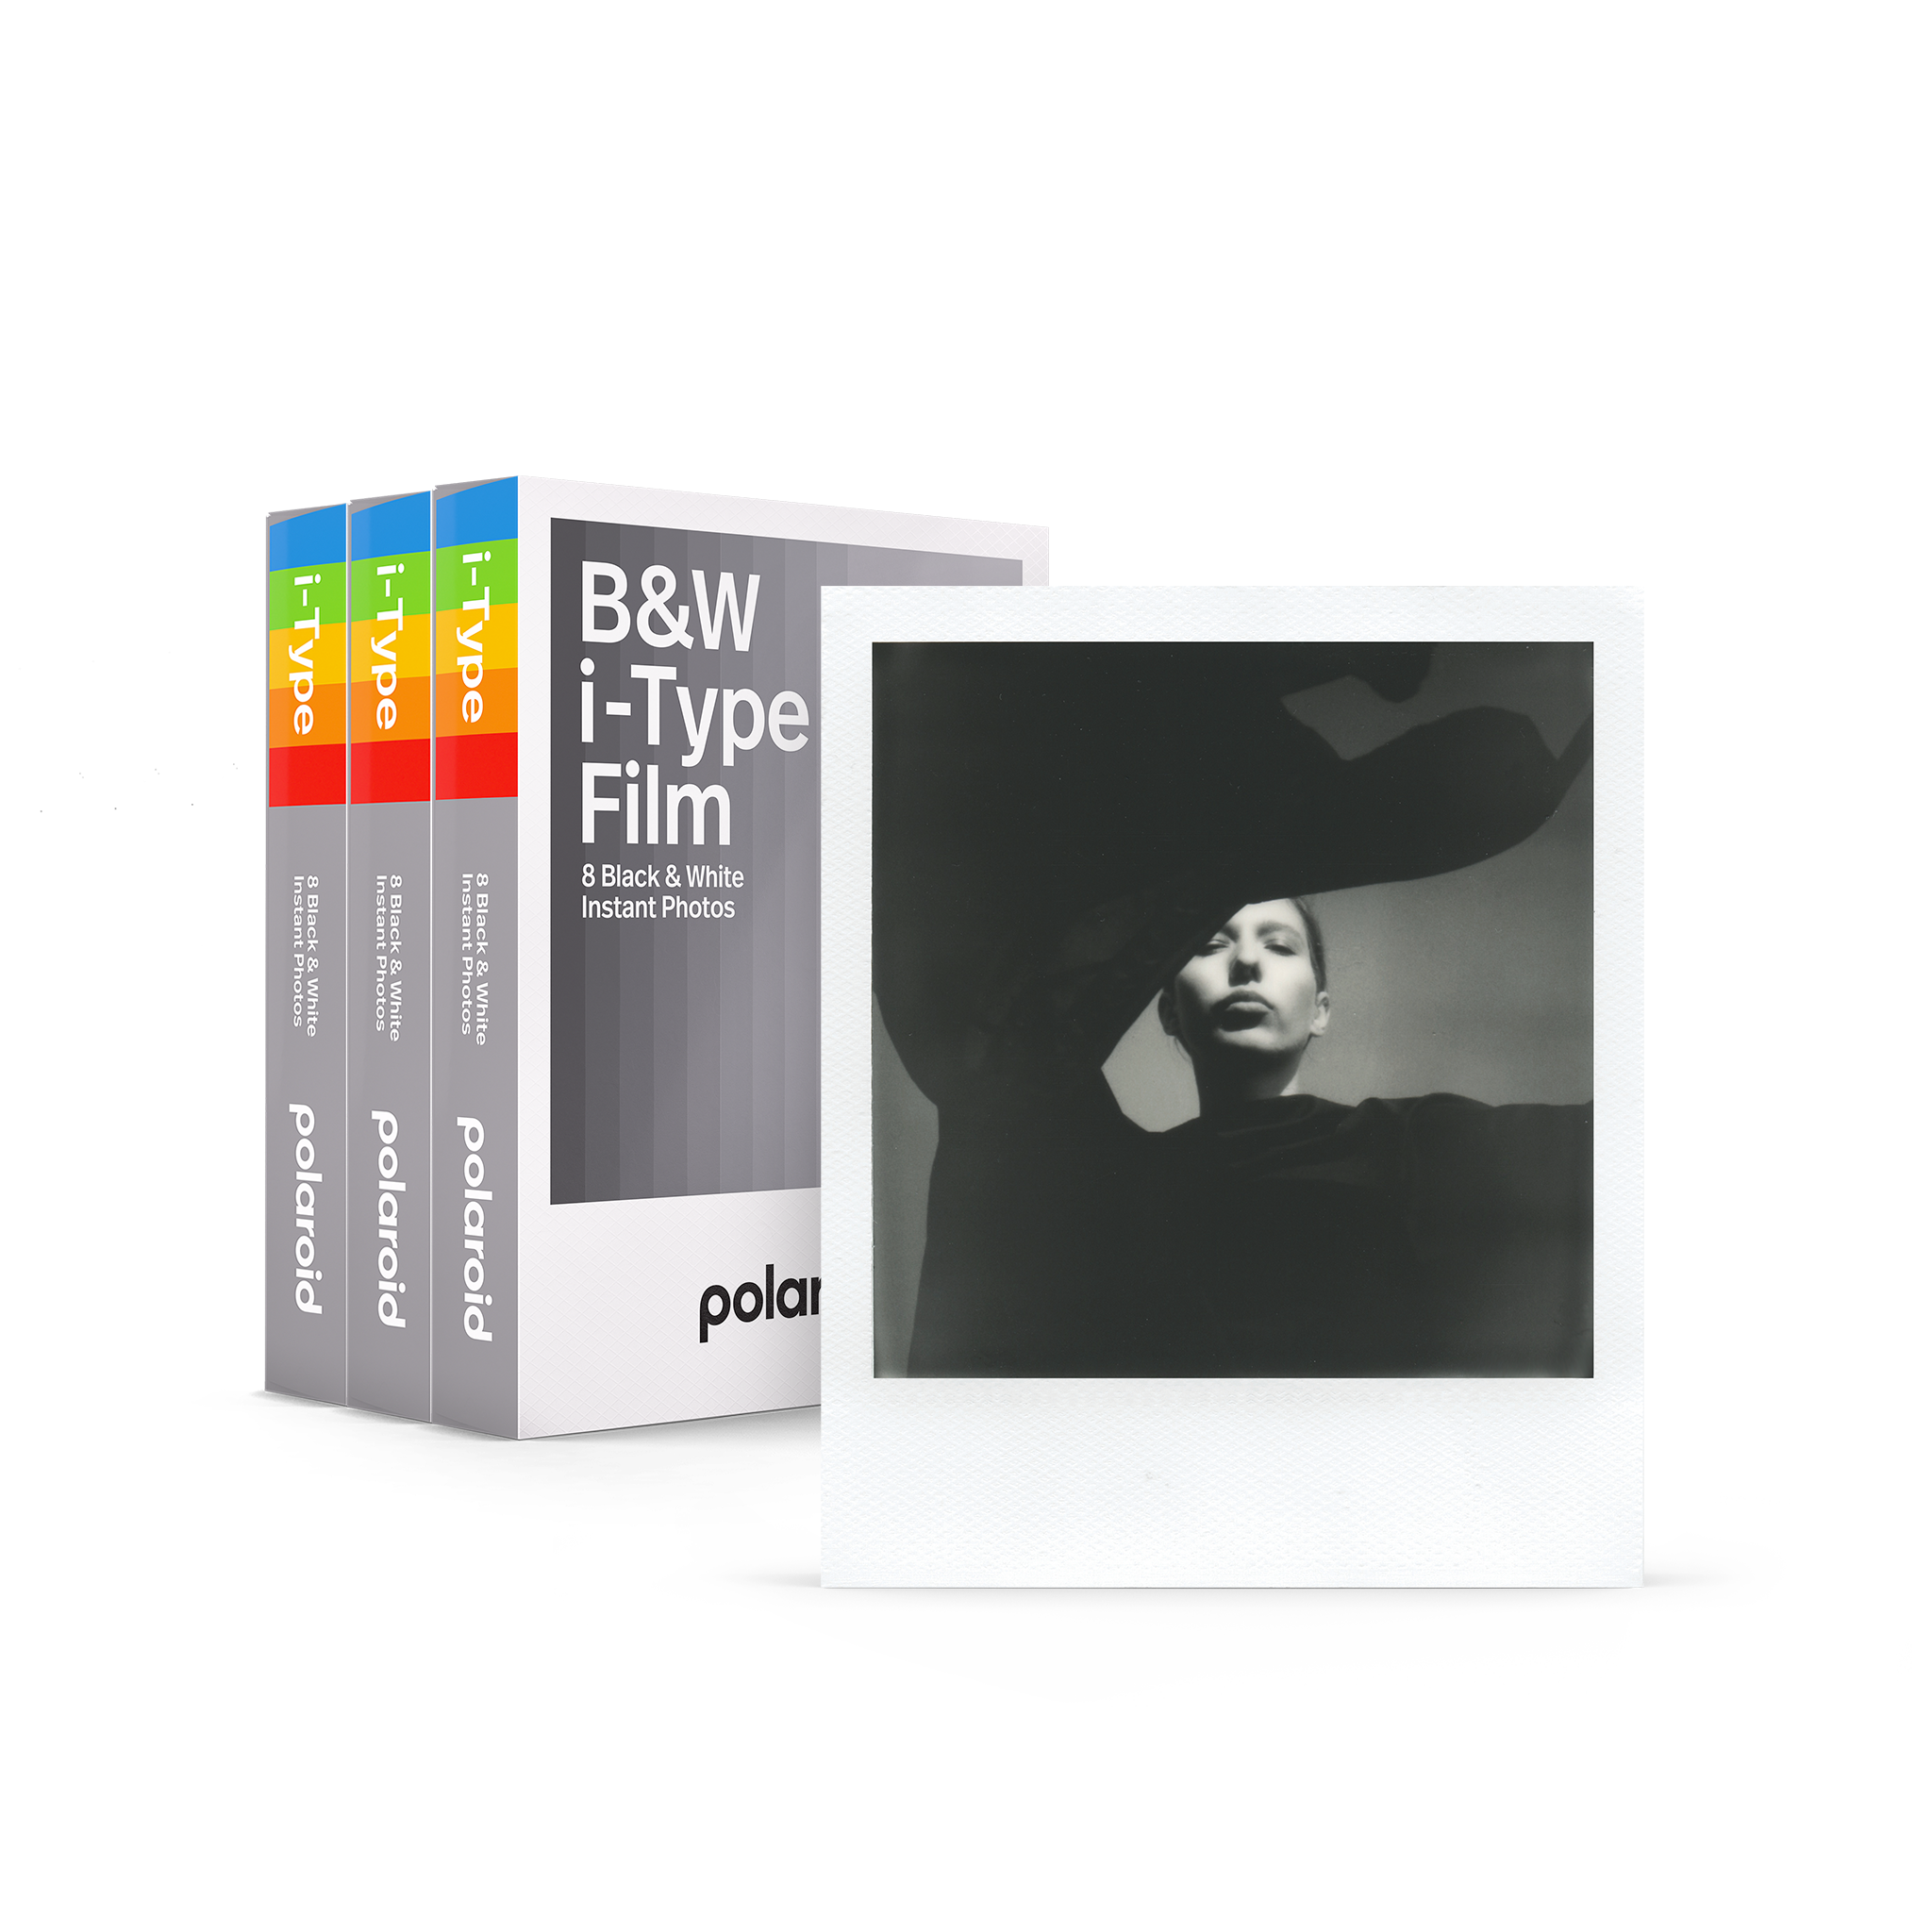 Polaroid B&W 600 Instant Film / 8 fotos (NEW) - Foto R3, film lab